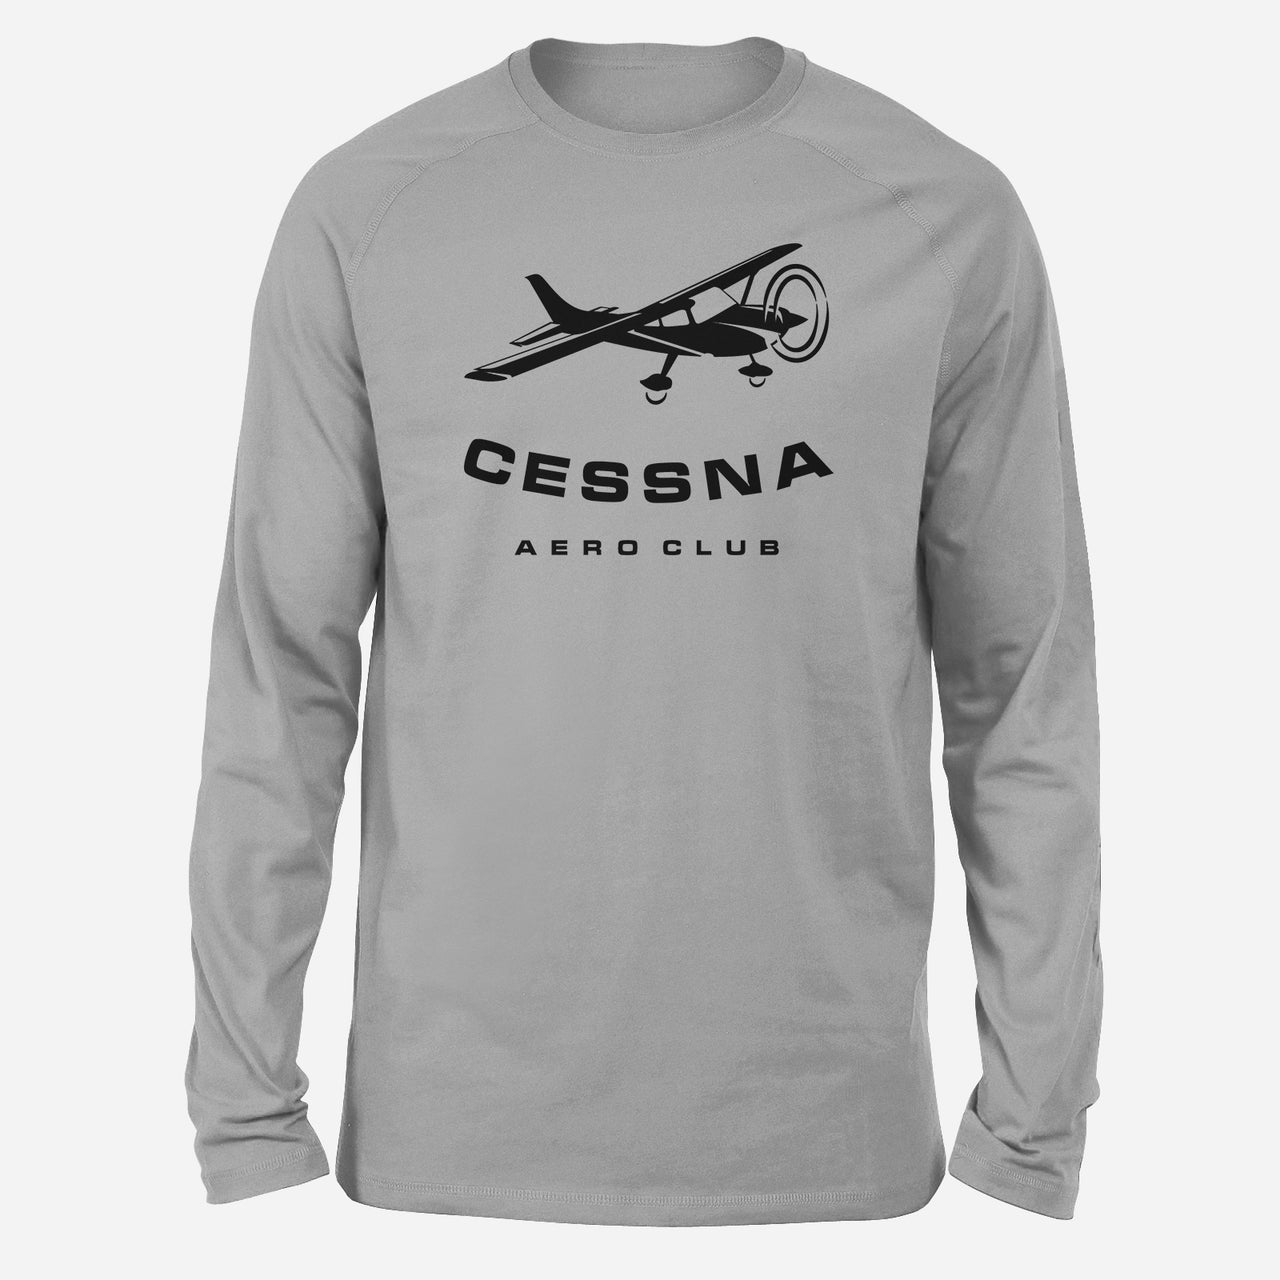 Cessna Aeroclub Designed Long-Sleeve T-Shirts